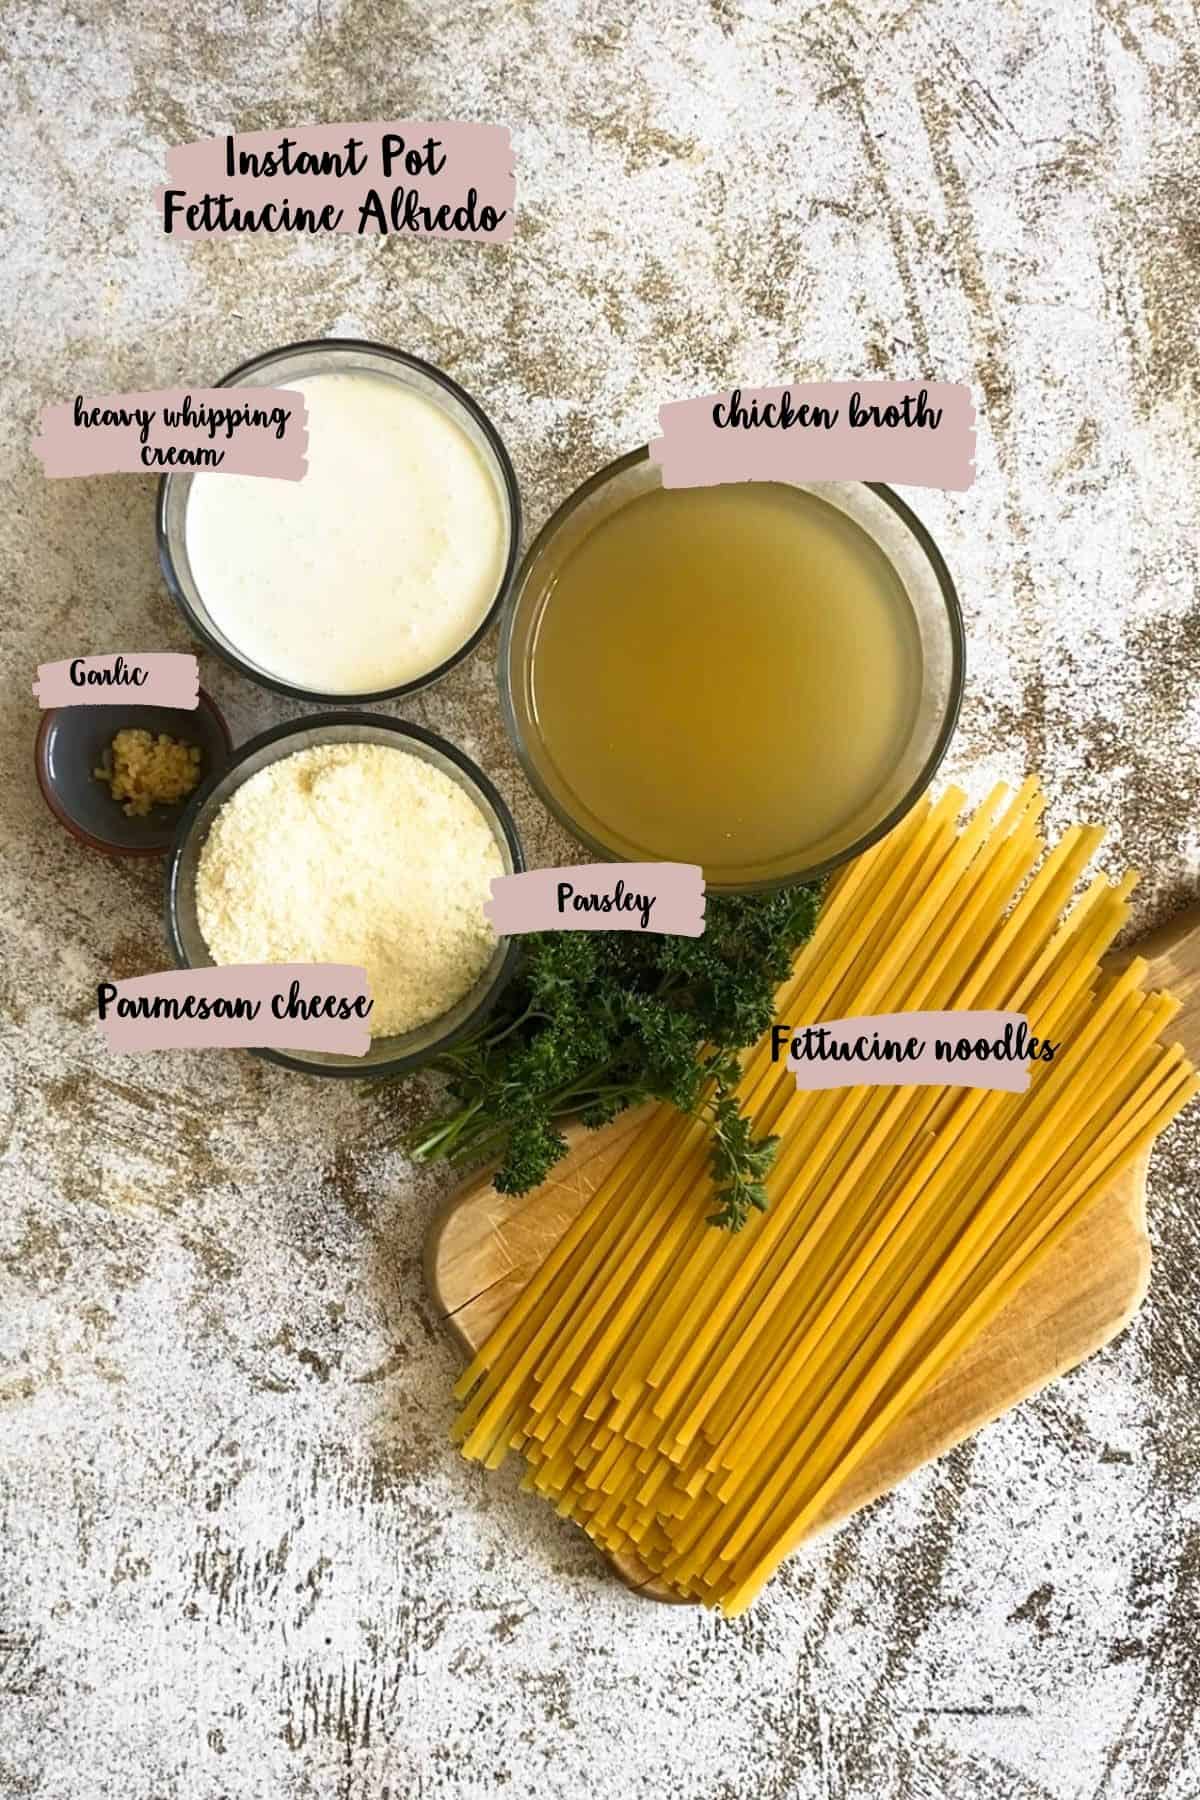 Measured ingredients to prepare Instant Pot Fettucine Alfredo. 